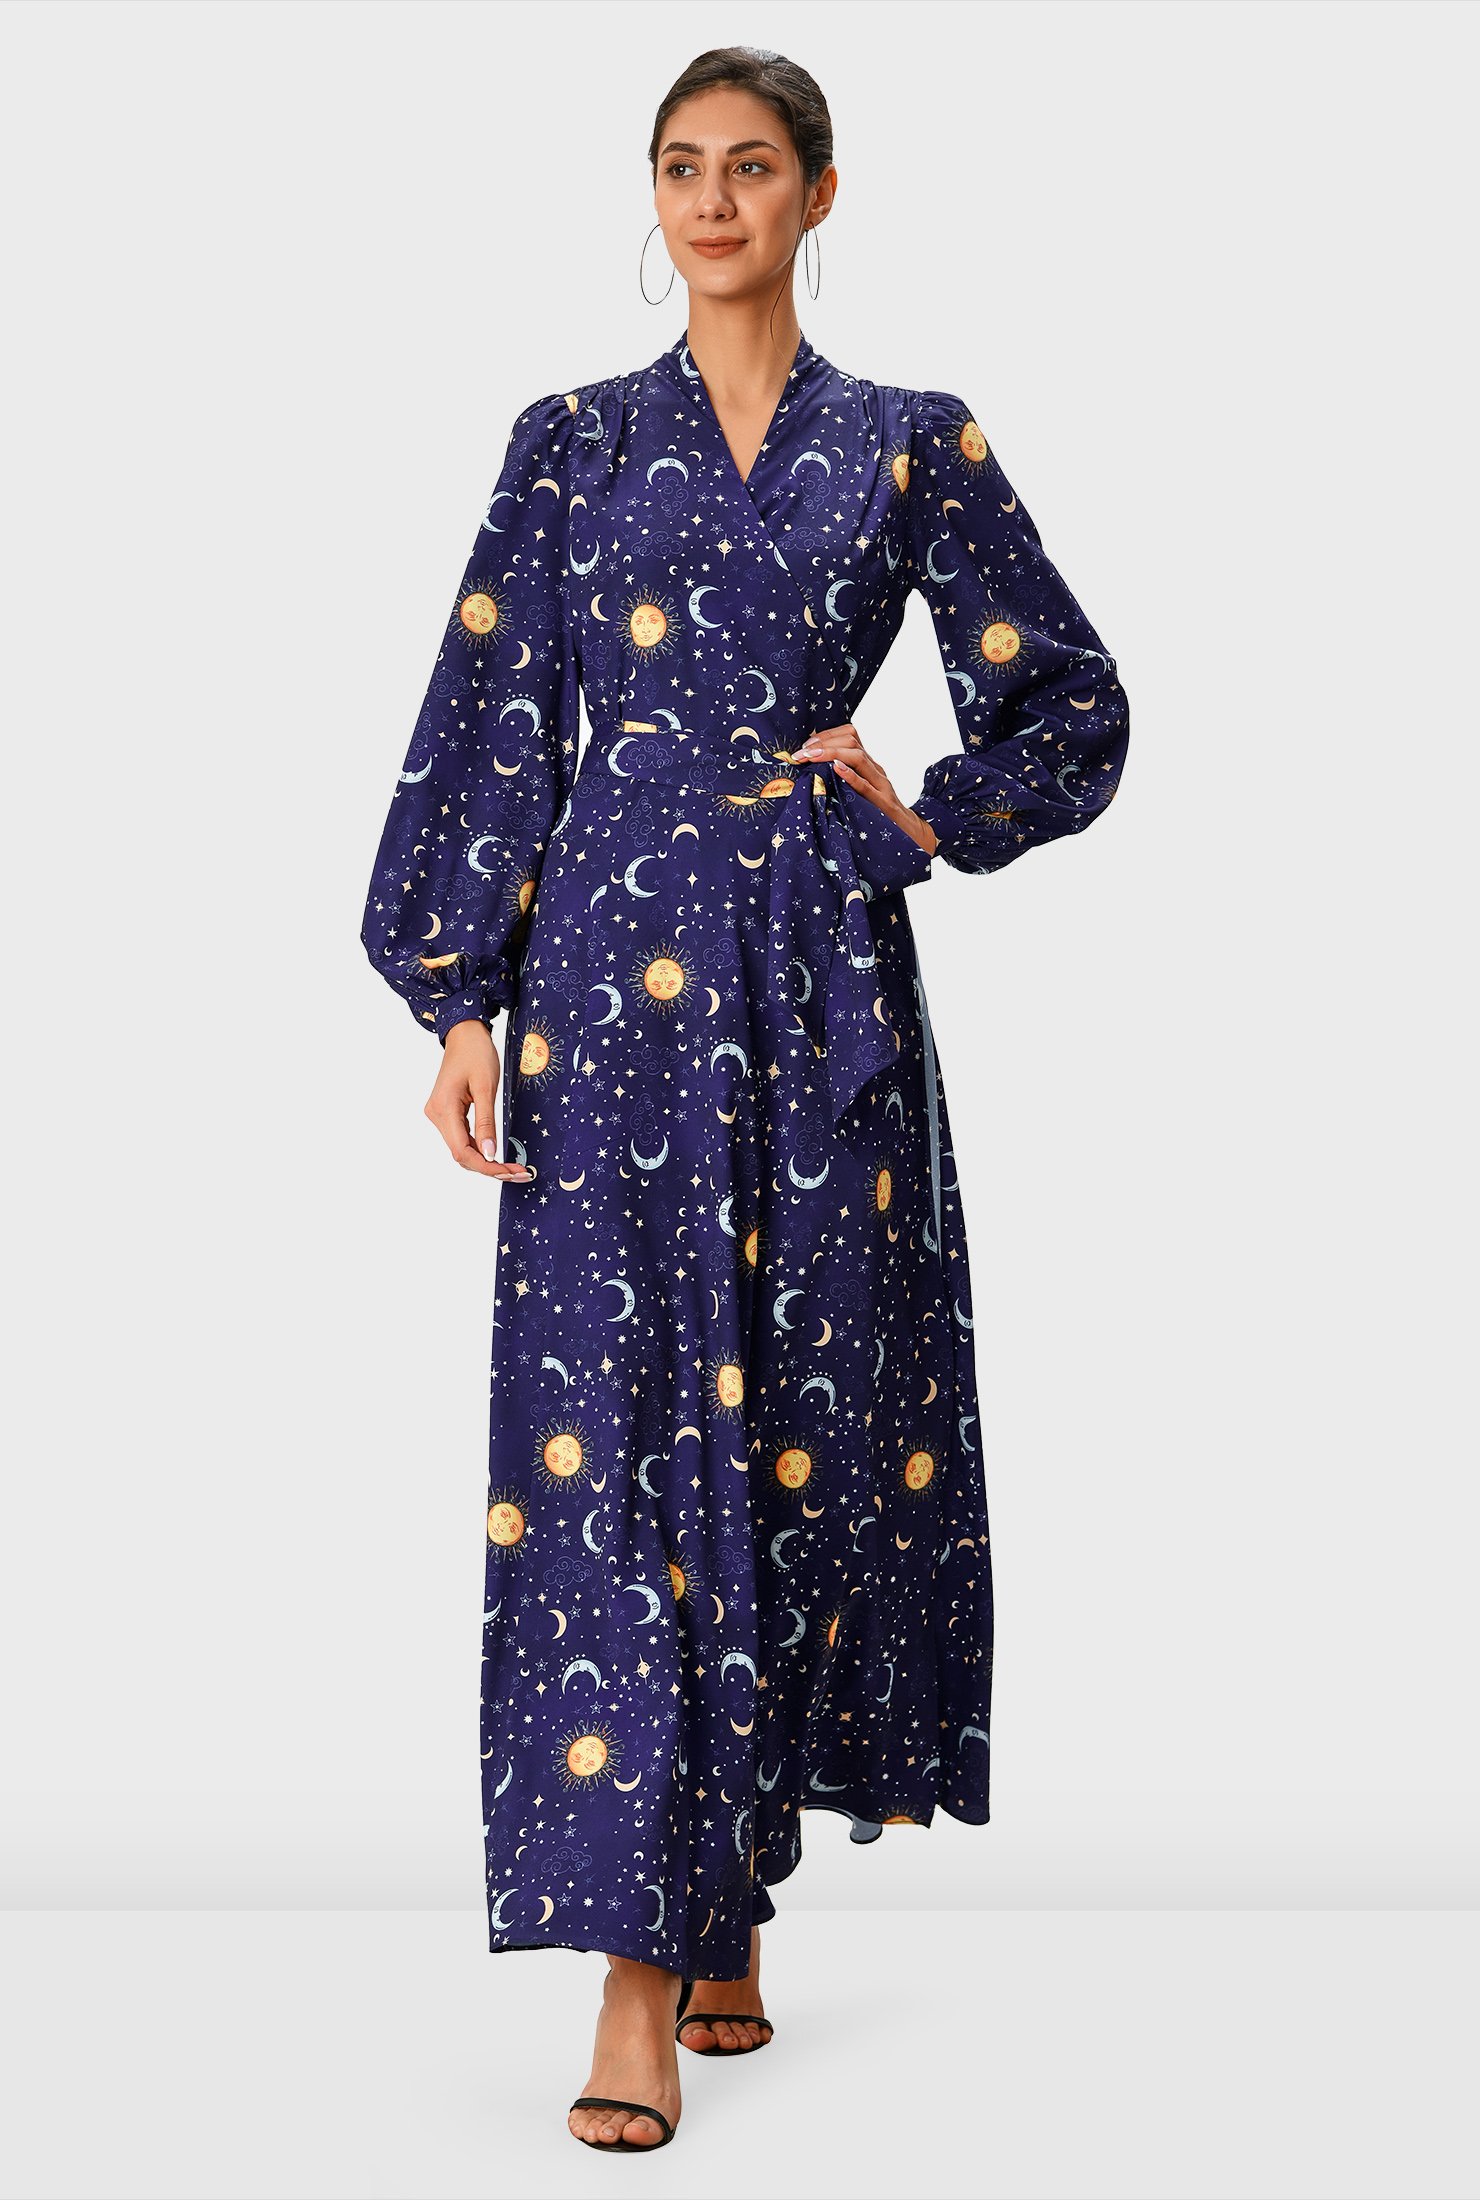 Shop Celestial print crepe wrap dress | eShakti